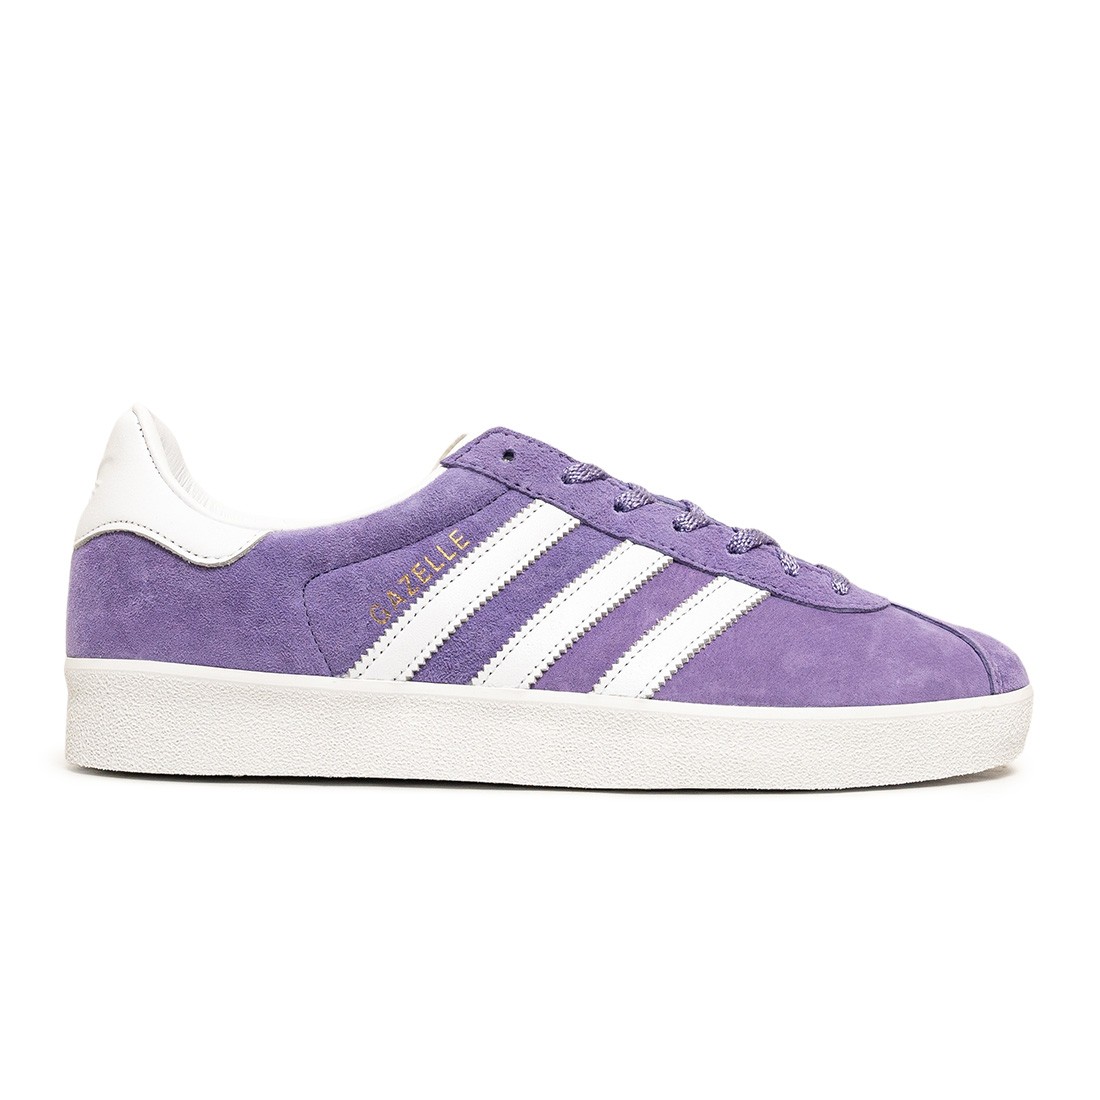 adidas gazelle blue purple